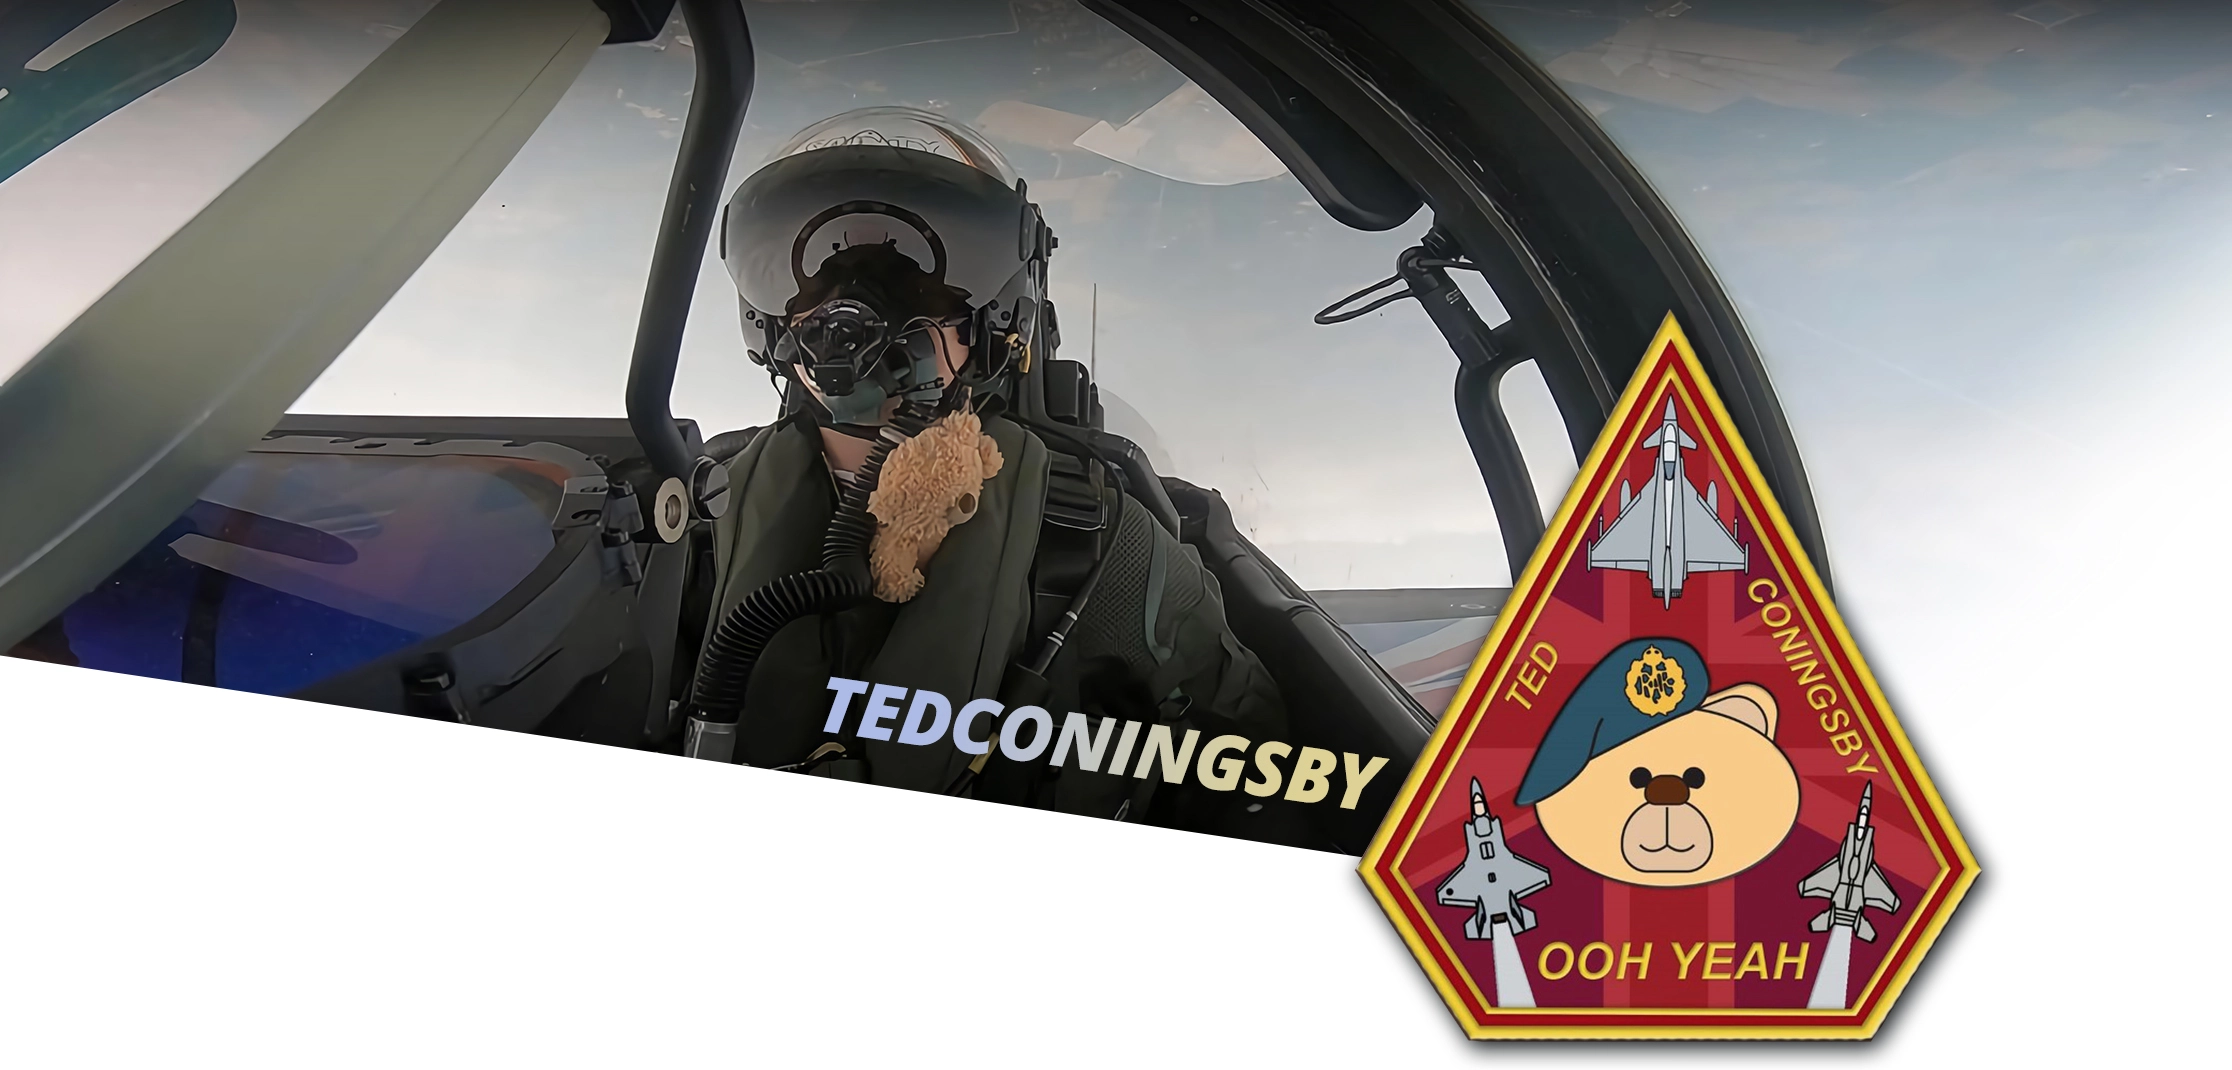 Ted Coningsby RAF